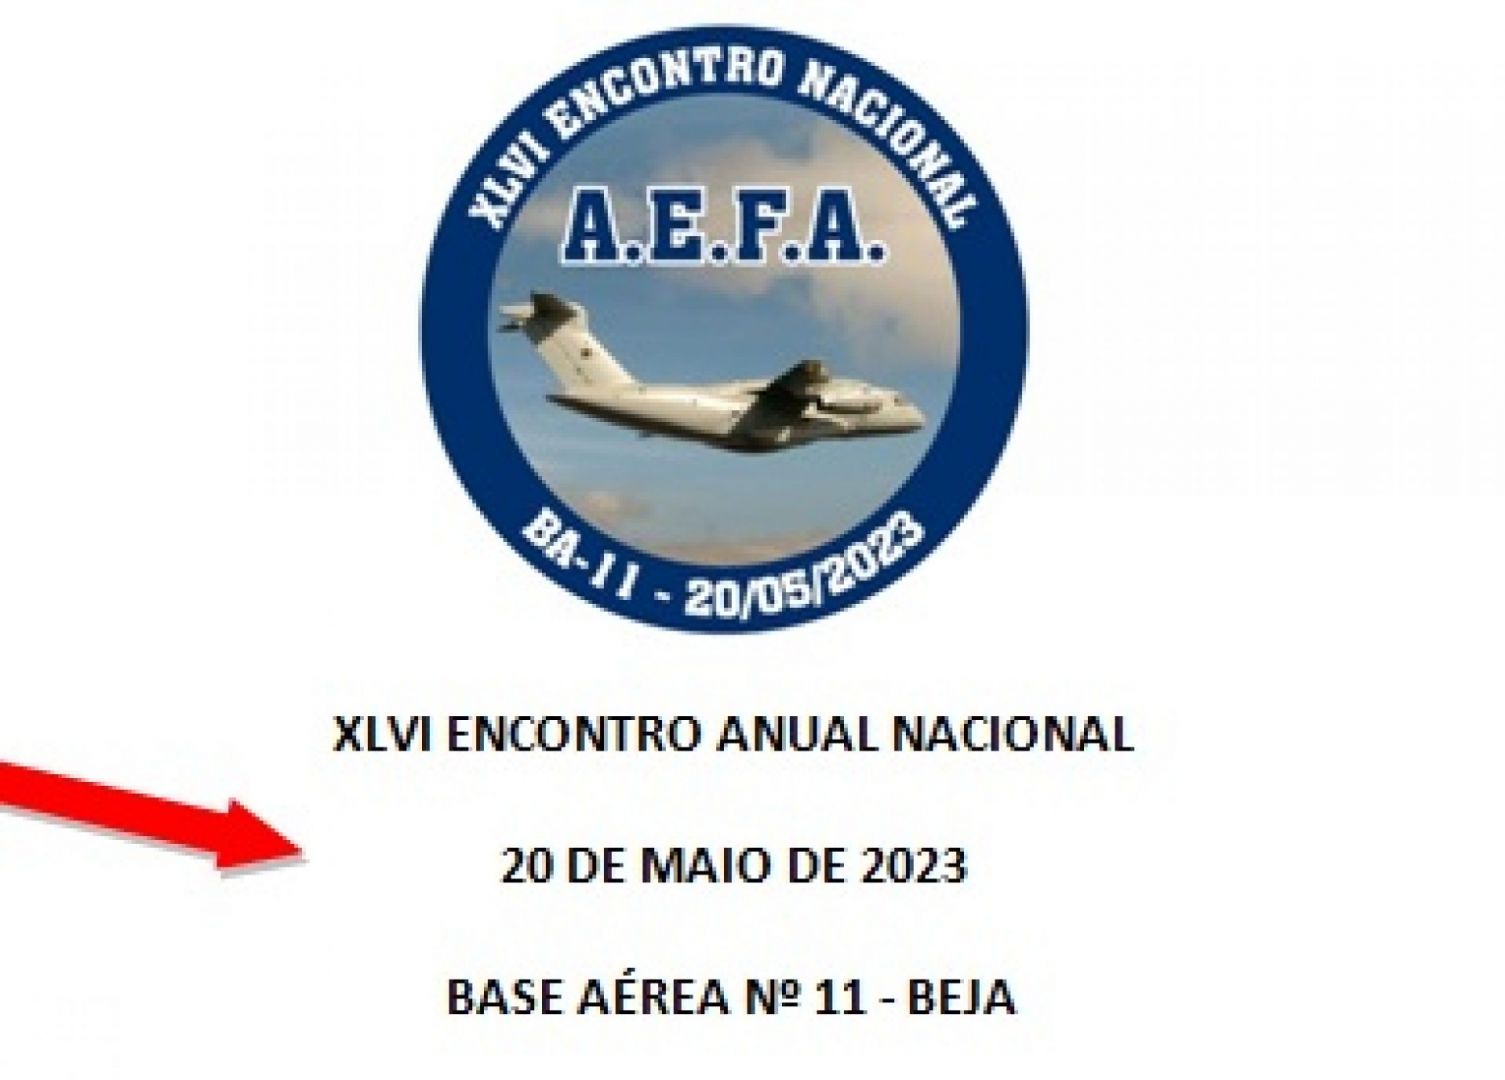 XLVI ENCONTRO ANUAL NACIONAL - 20 Maio 2023 - Base Area 11, Beja